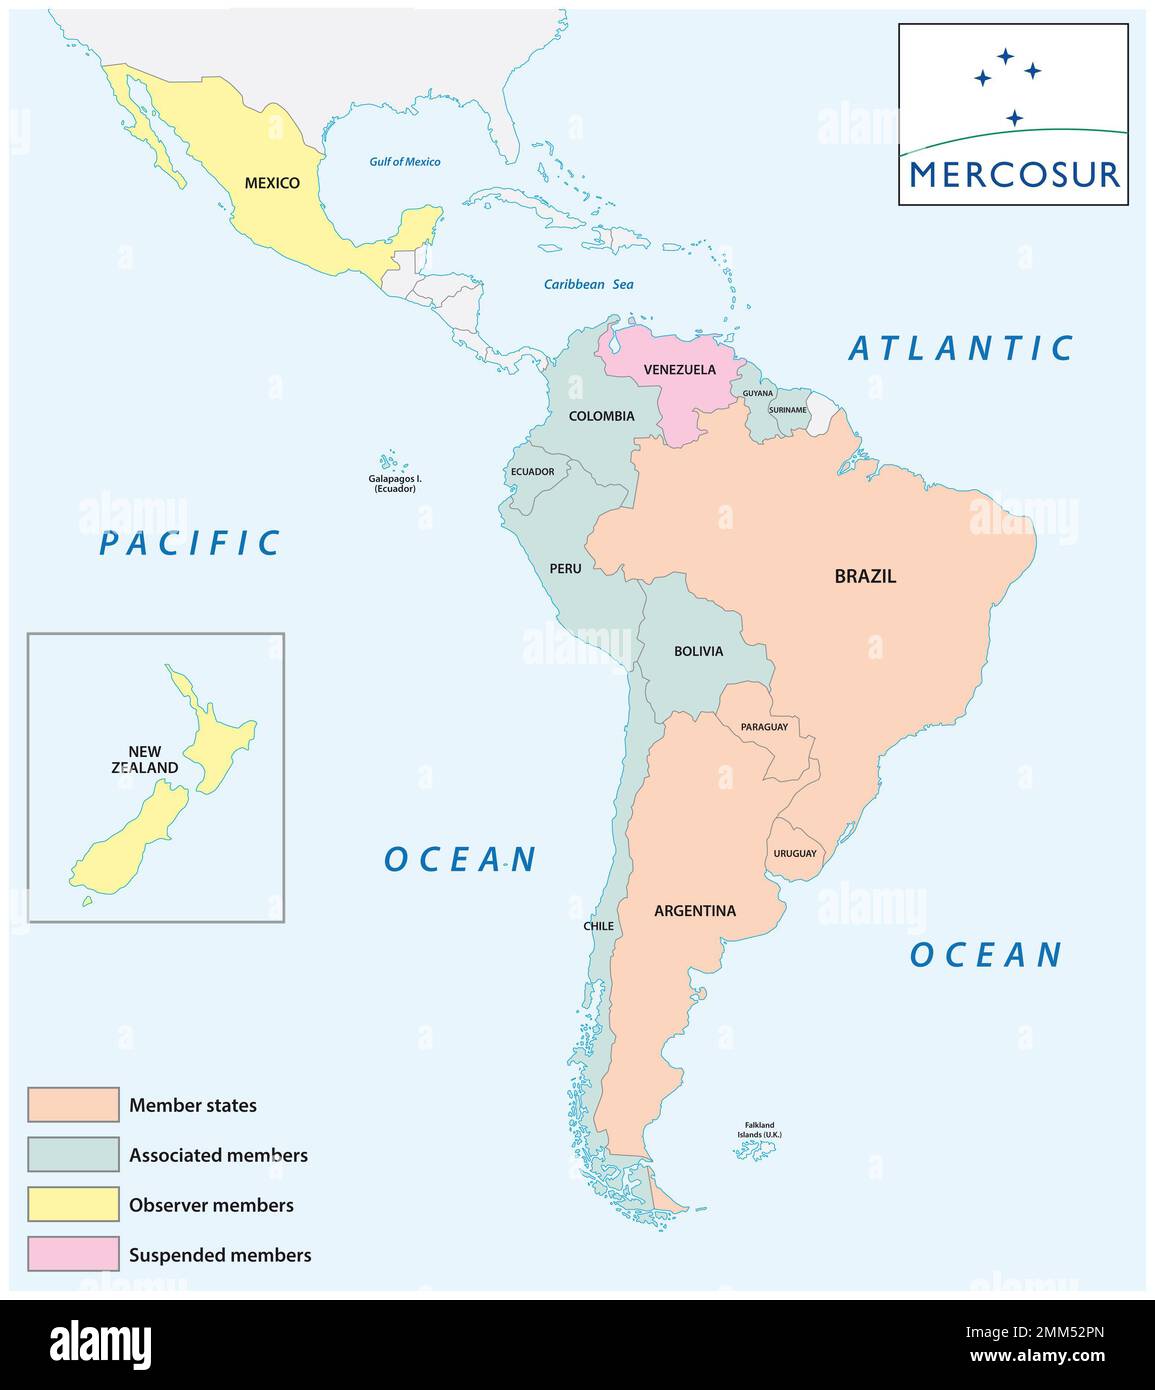 Map of the international economic organization in Latin America Mercosur Stock Photo